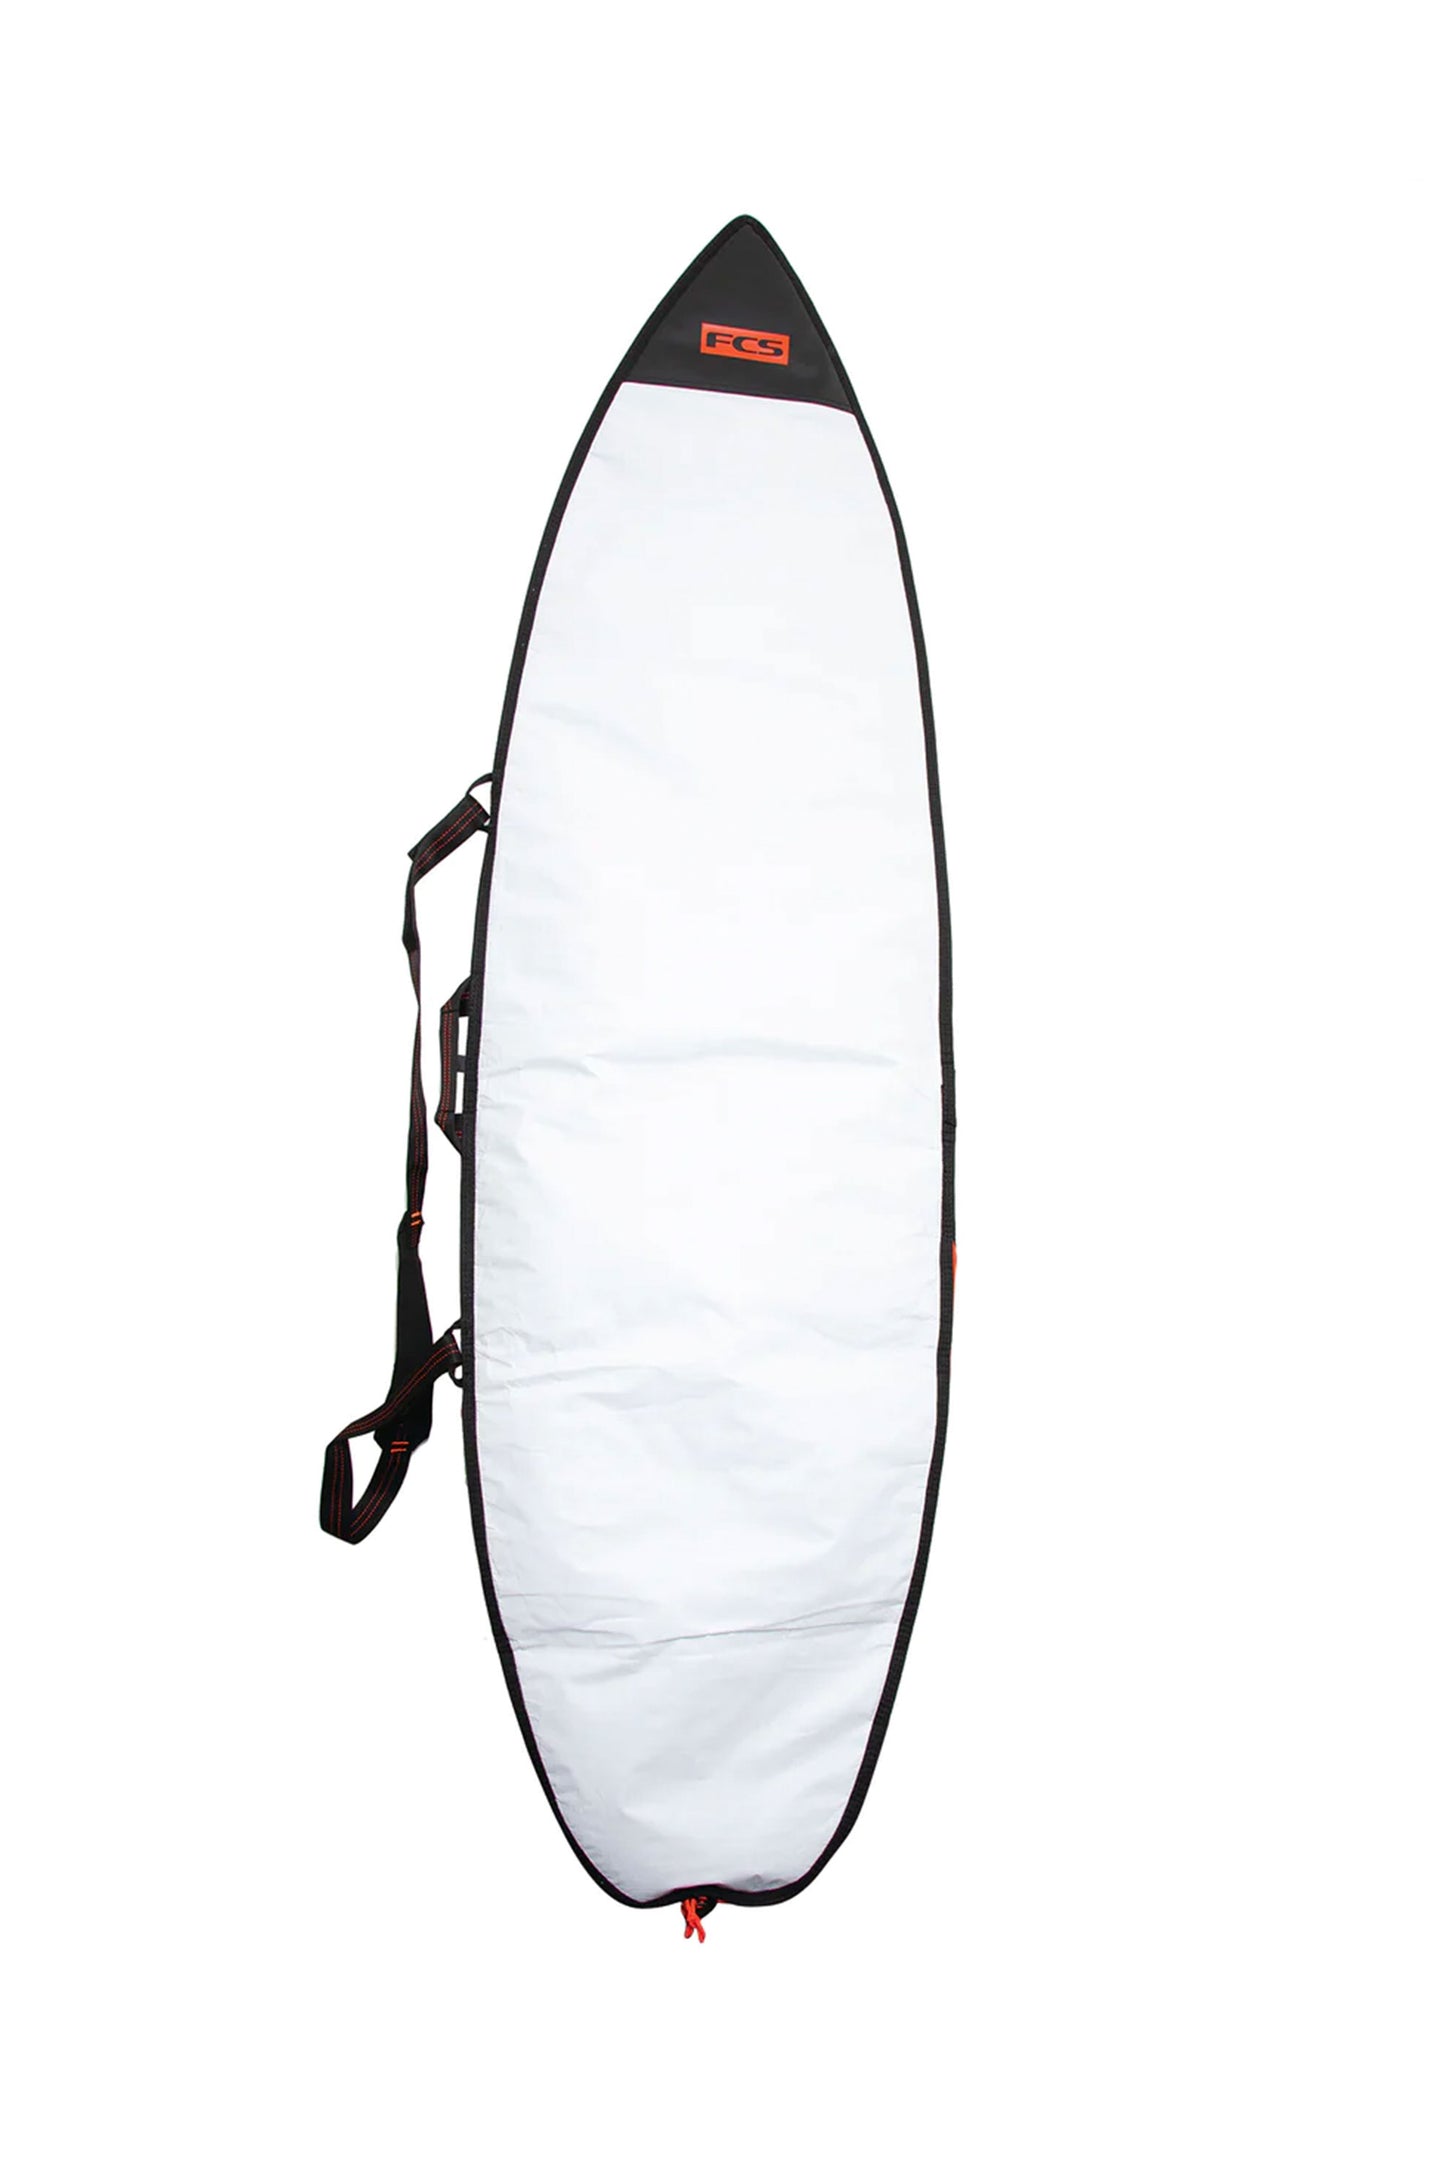 Pukas-Surf-Shop-fcs-boardbags-7.0-classic-fun-board-blue